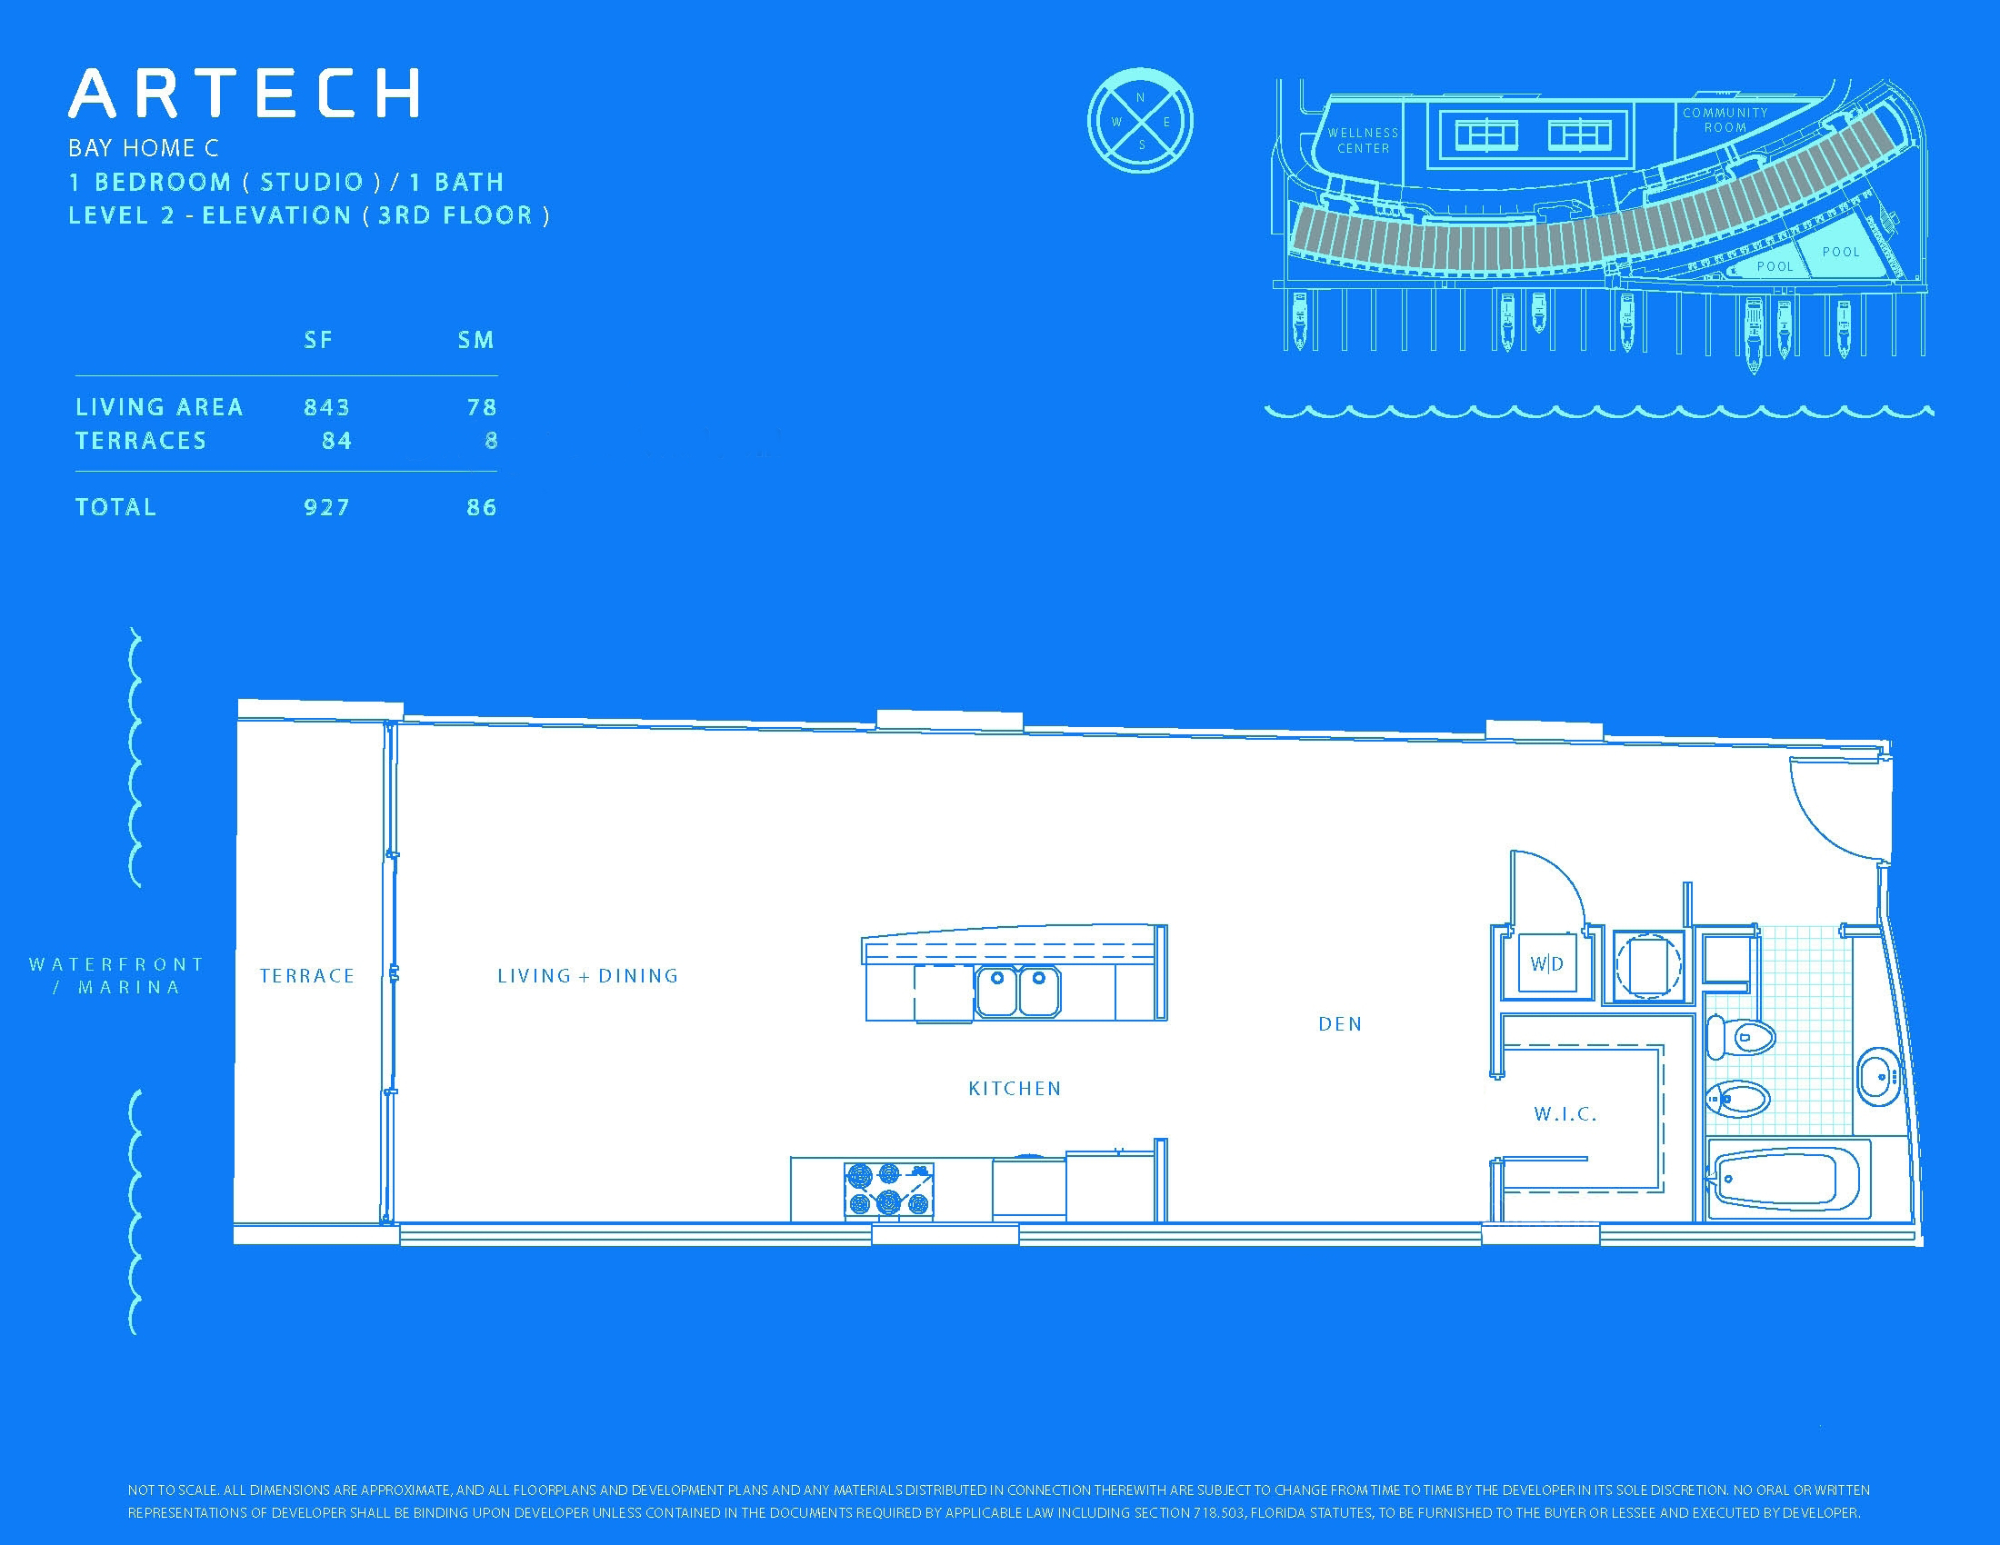 Artech Aventura Bay Home C Floor Plan